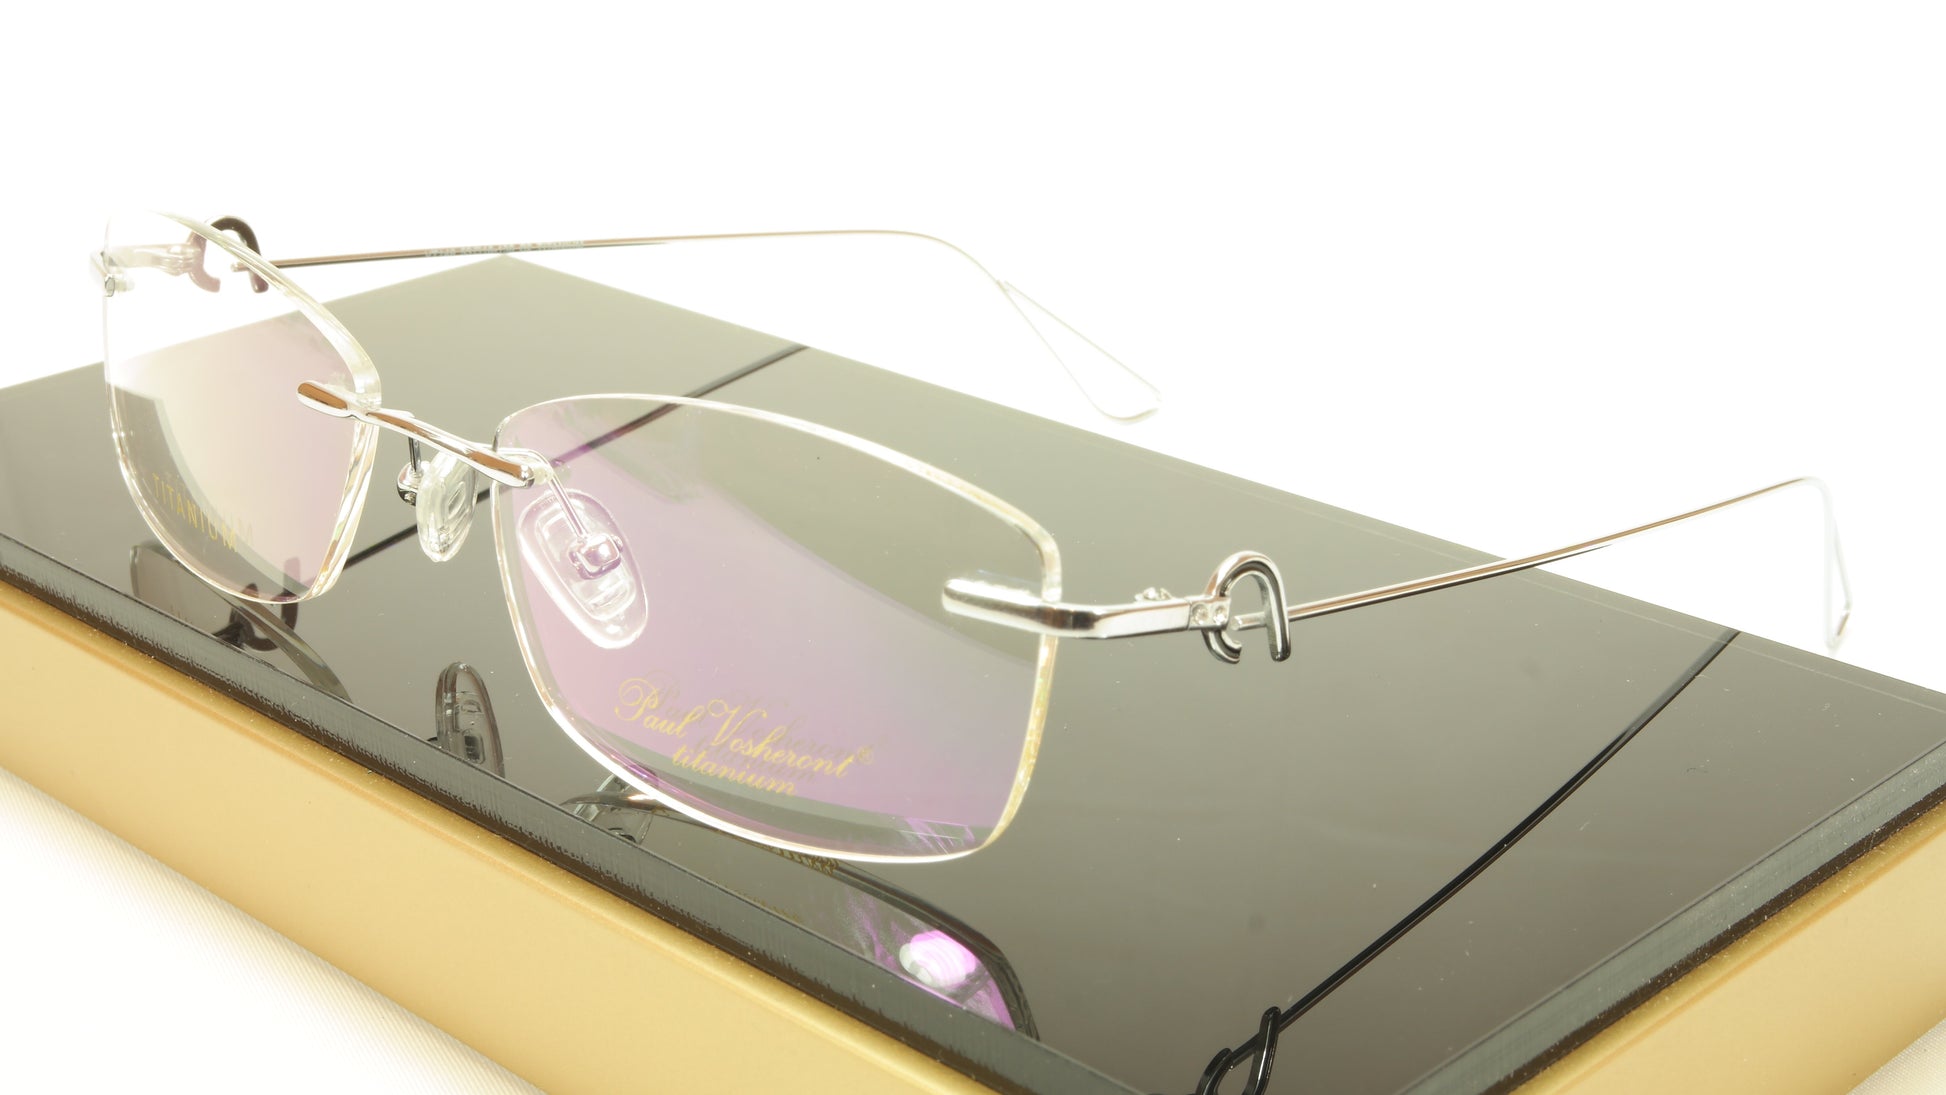 Paul Vosheront VT146 C2 Titanium Silver Rimless Eyeglasses Frame Italy - Frame Bay